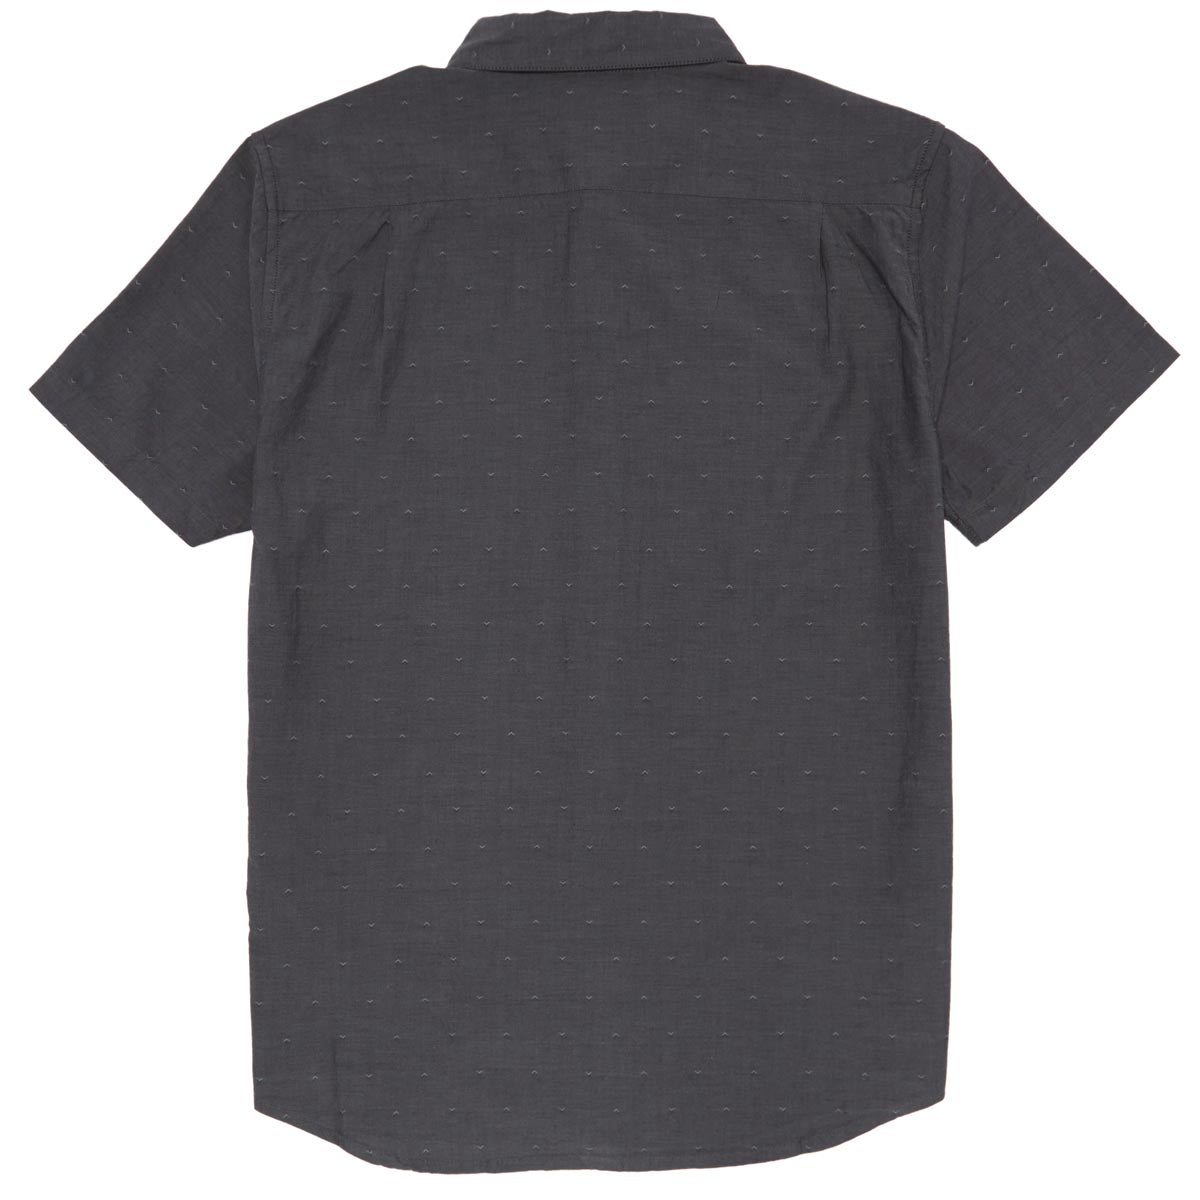 RVCA Thatll Do Dobby Shirt - Black image 2